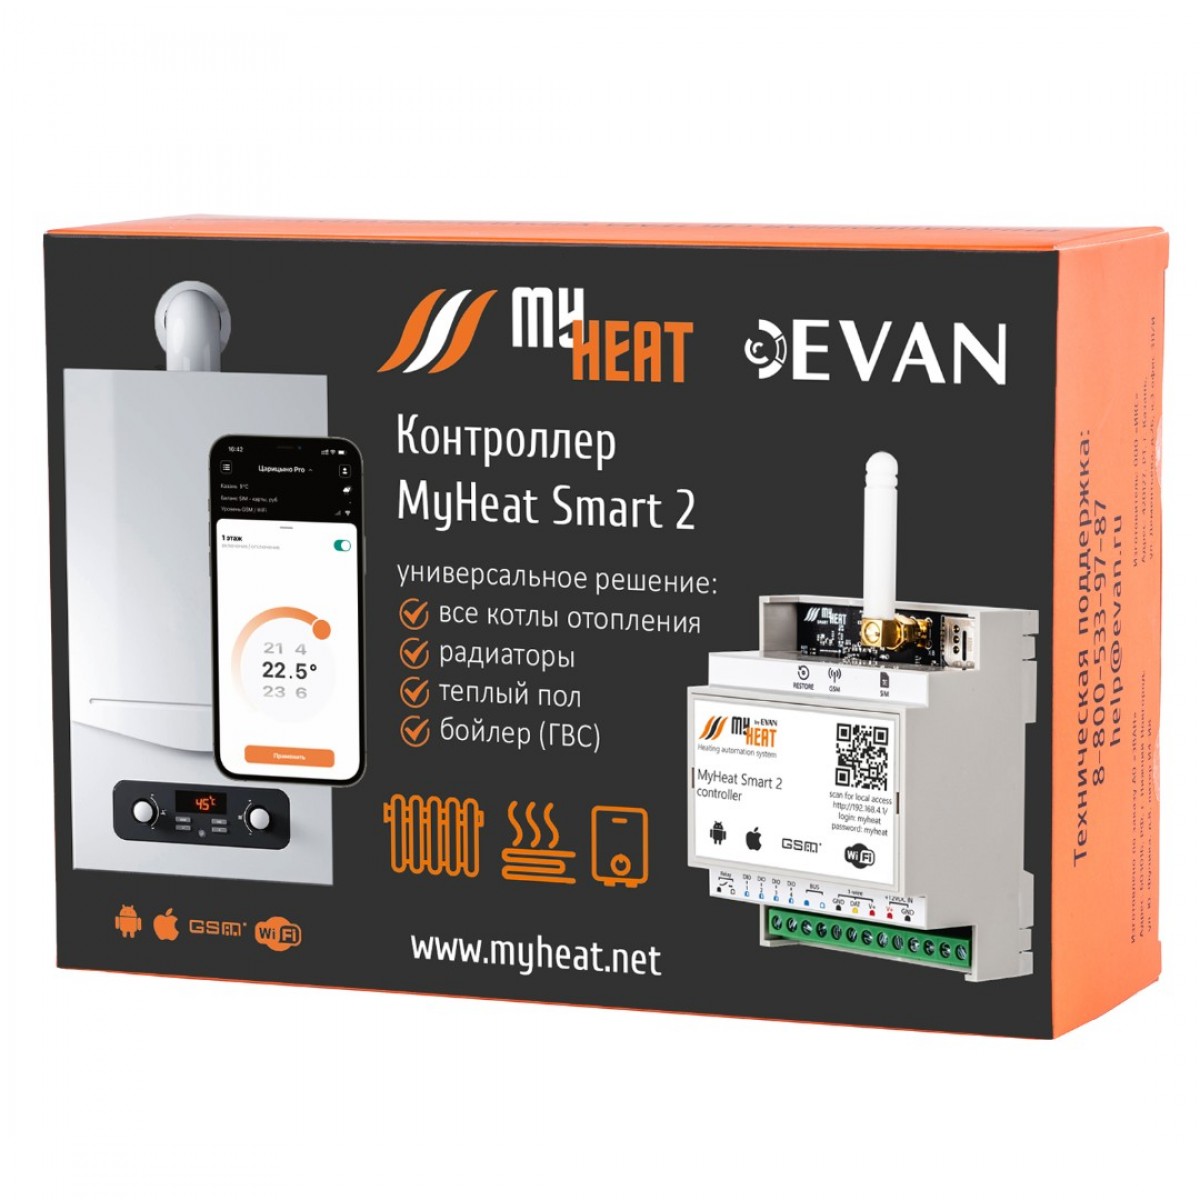 Smarts gsm. Контроллер MYHEAT smart2 6281 Эван (арт. 6281). Термостат Эван my Heat Smart 2. Контроллер GSM для отопления. Прибор управления MYHEAT Smart 2.